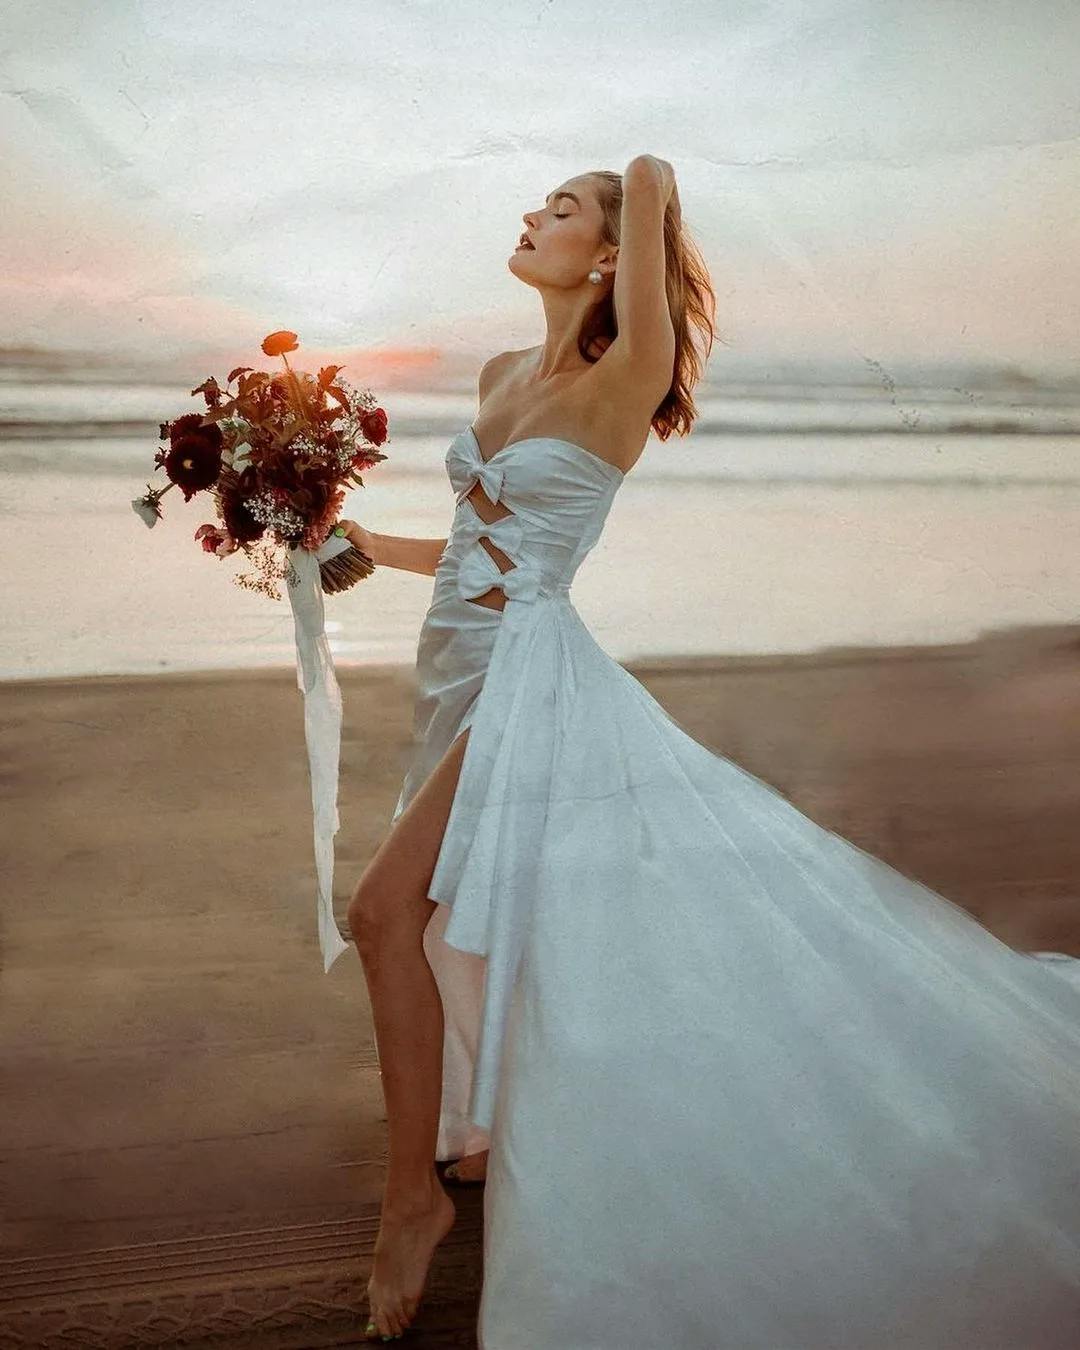 Bride wearing gown wiht cutouts